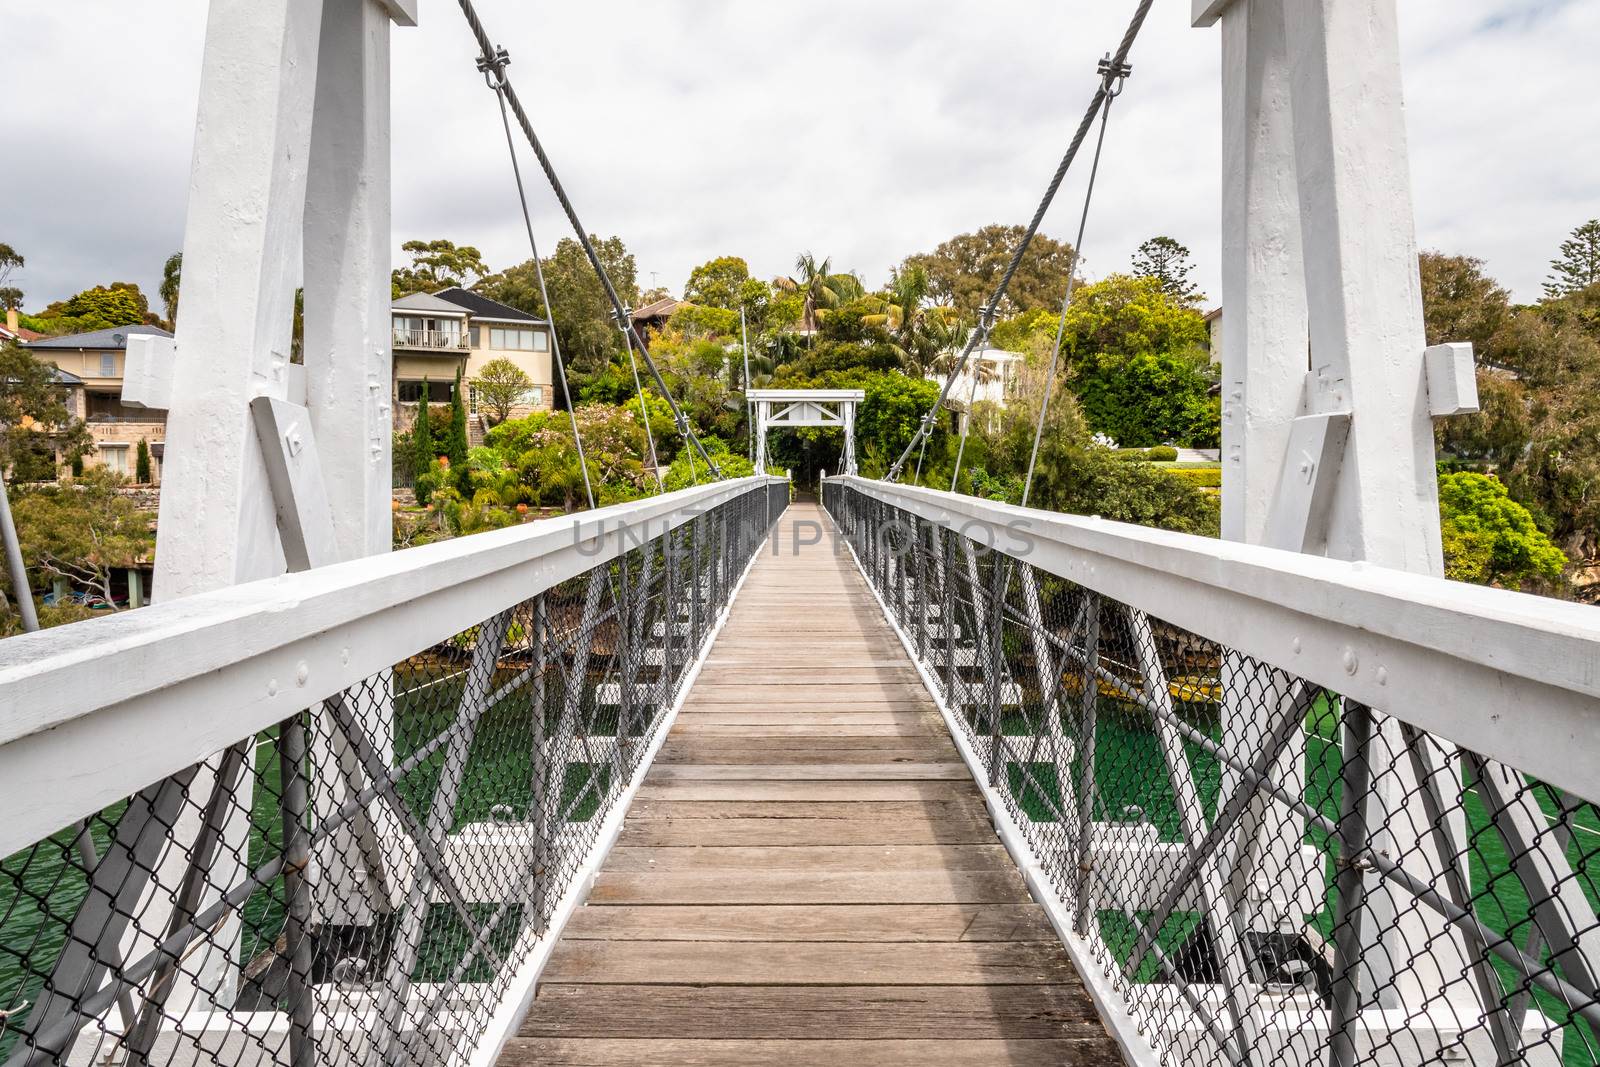 Parsley bay suspension bridge in Sydney, NSW Australia by mauricallari